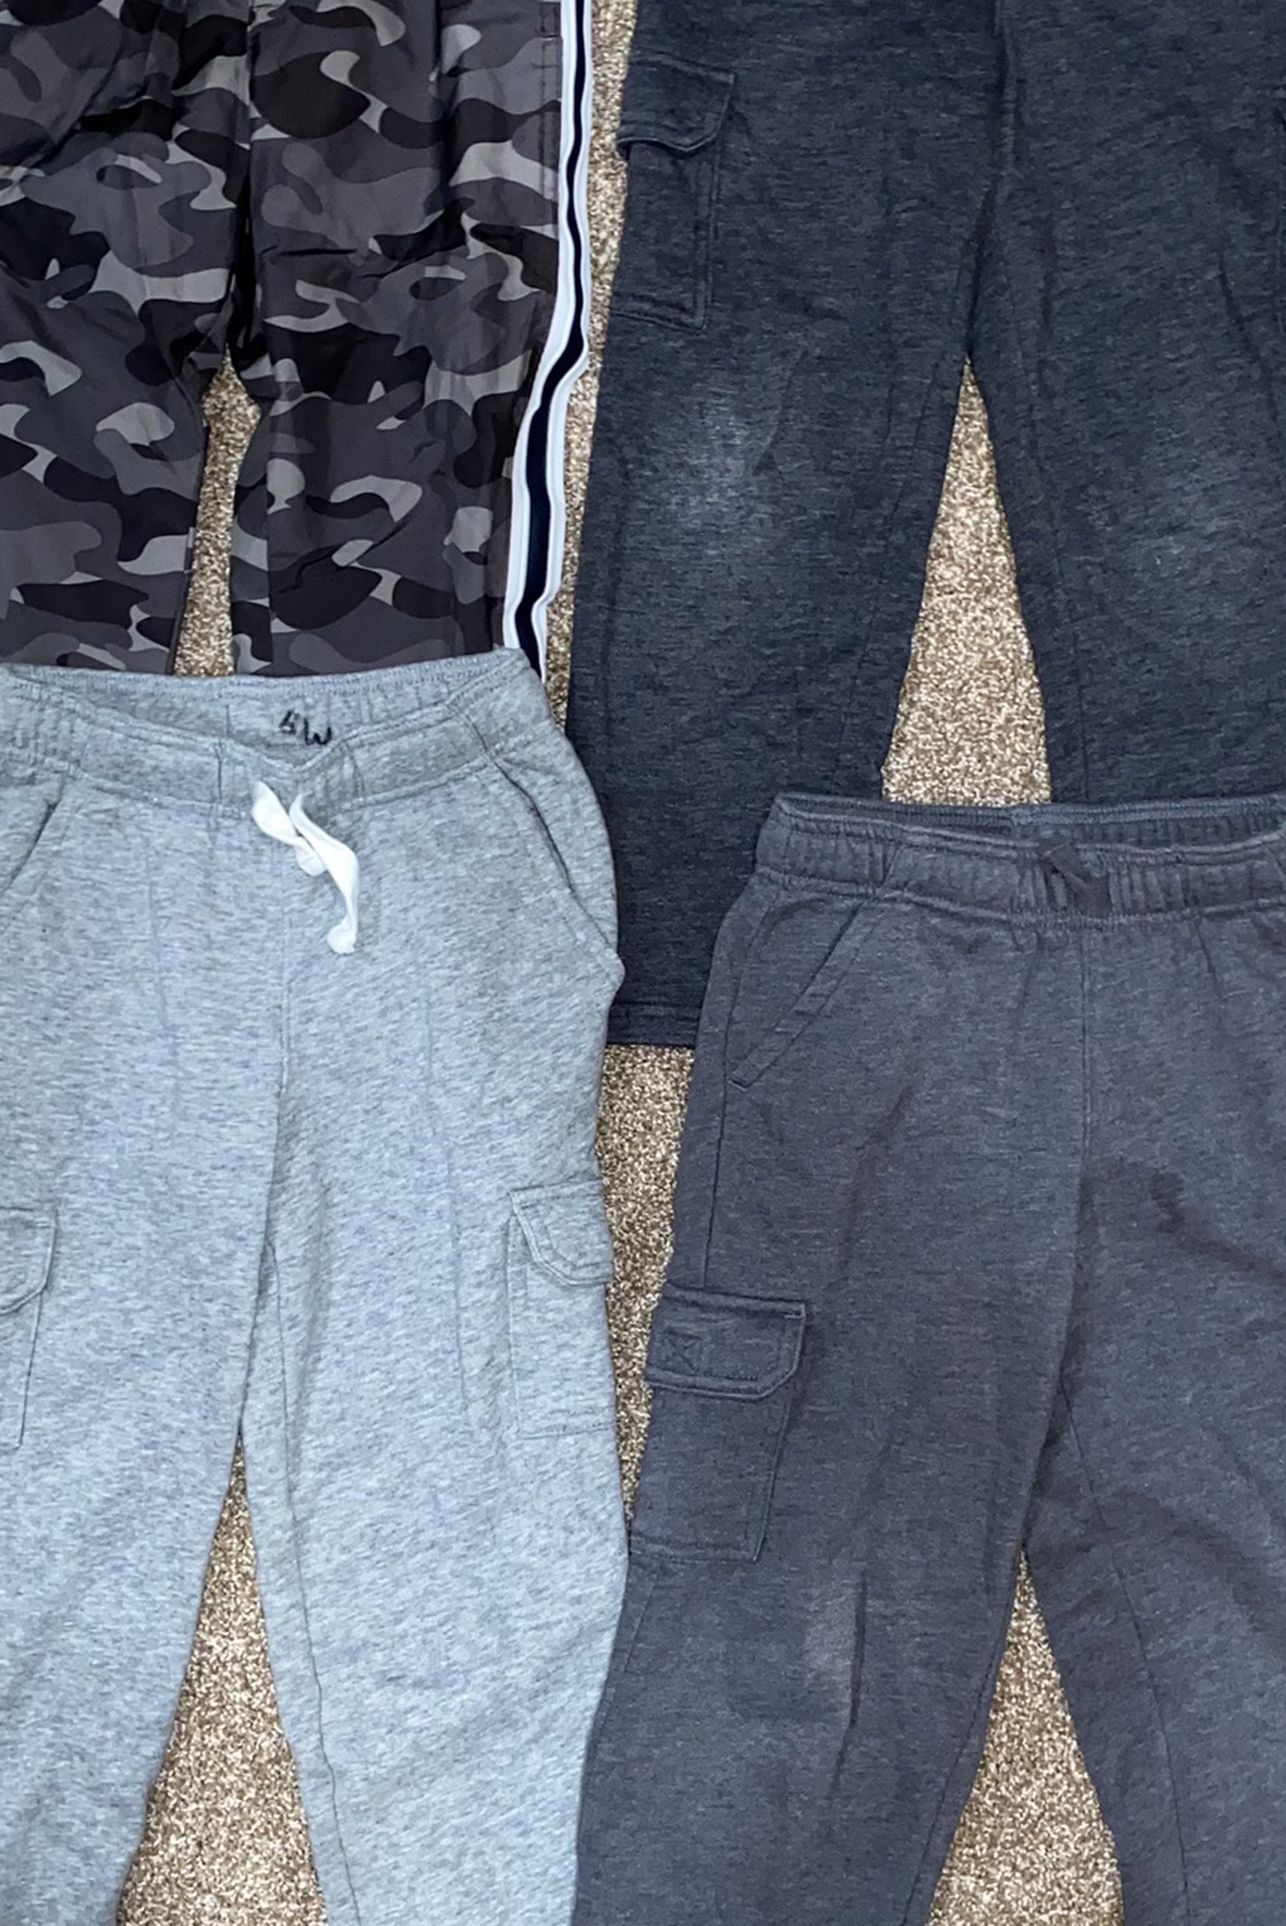 Boys Fleece Pants (3)/Lined Athletic Pants (1), Size 5